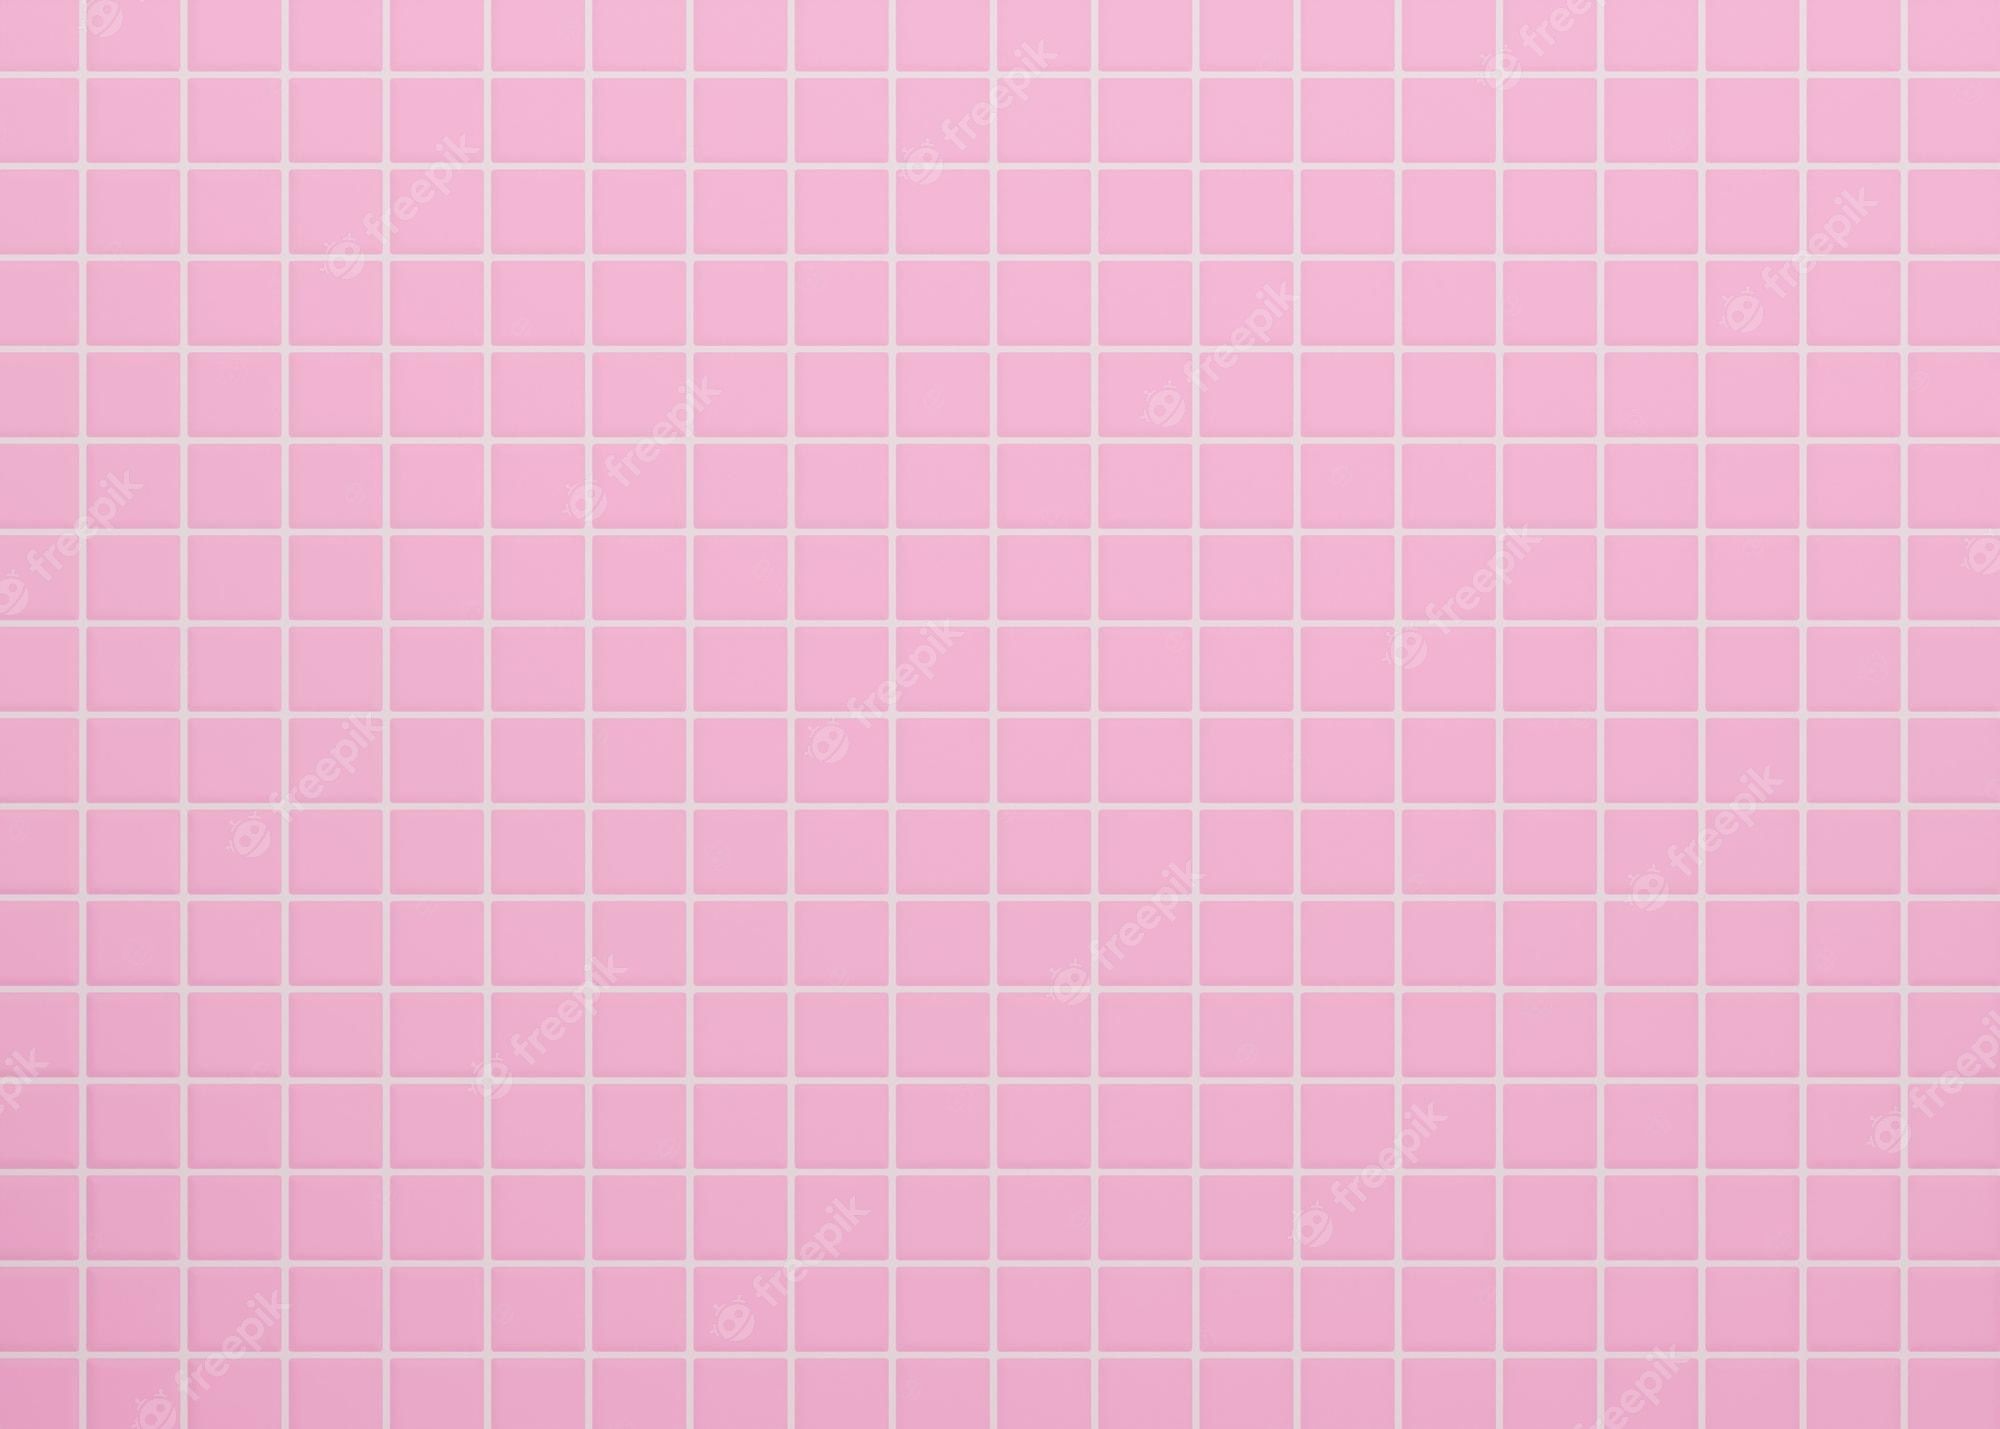 Pink grid pattern background - Grid